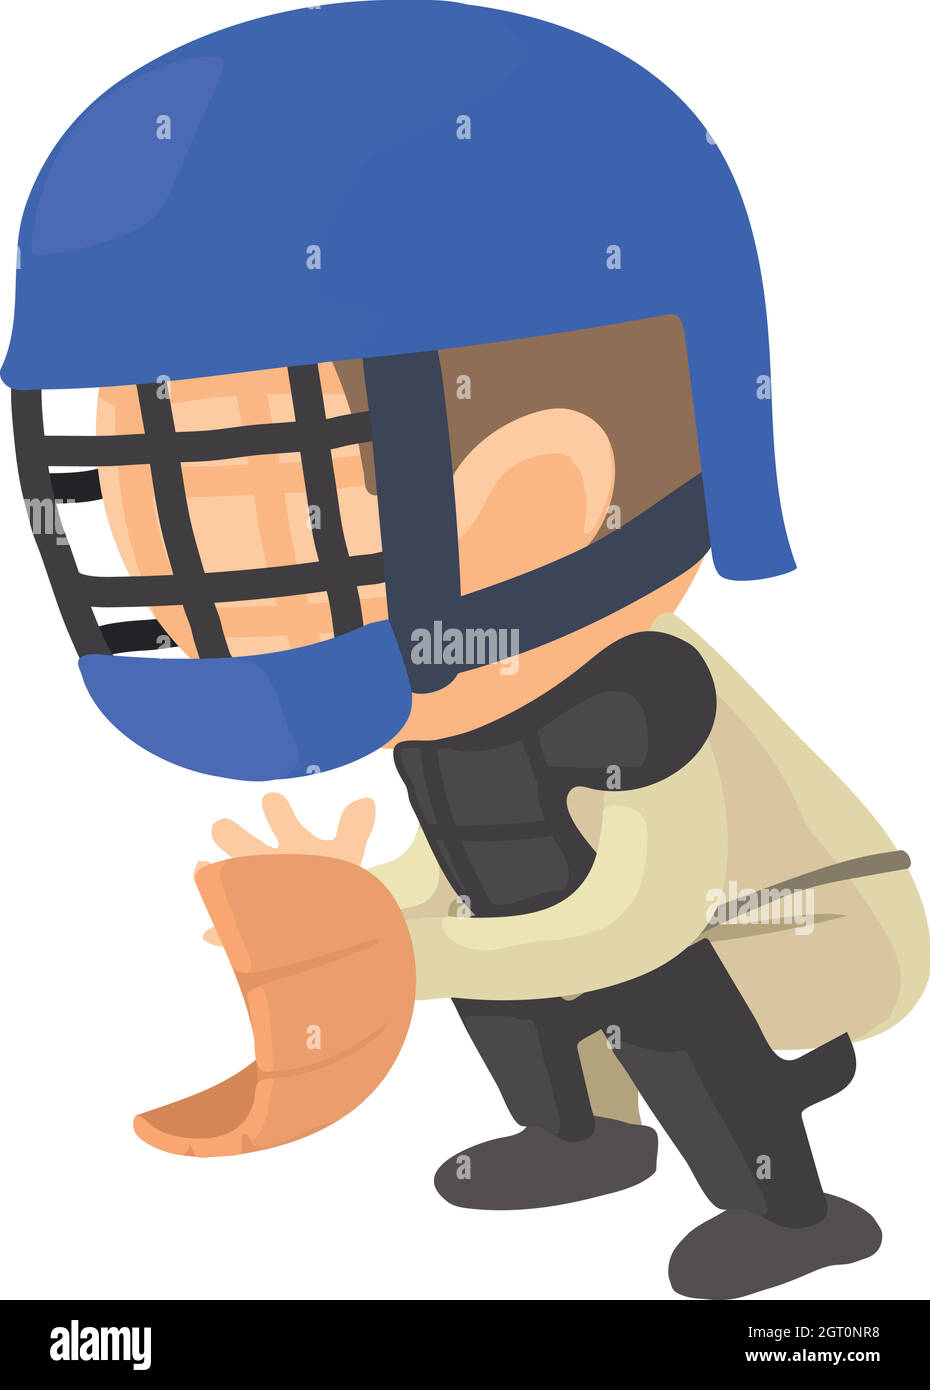 Baseball Catcher Helmet Cartoon Icon Stock Illustration - Download